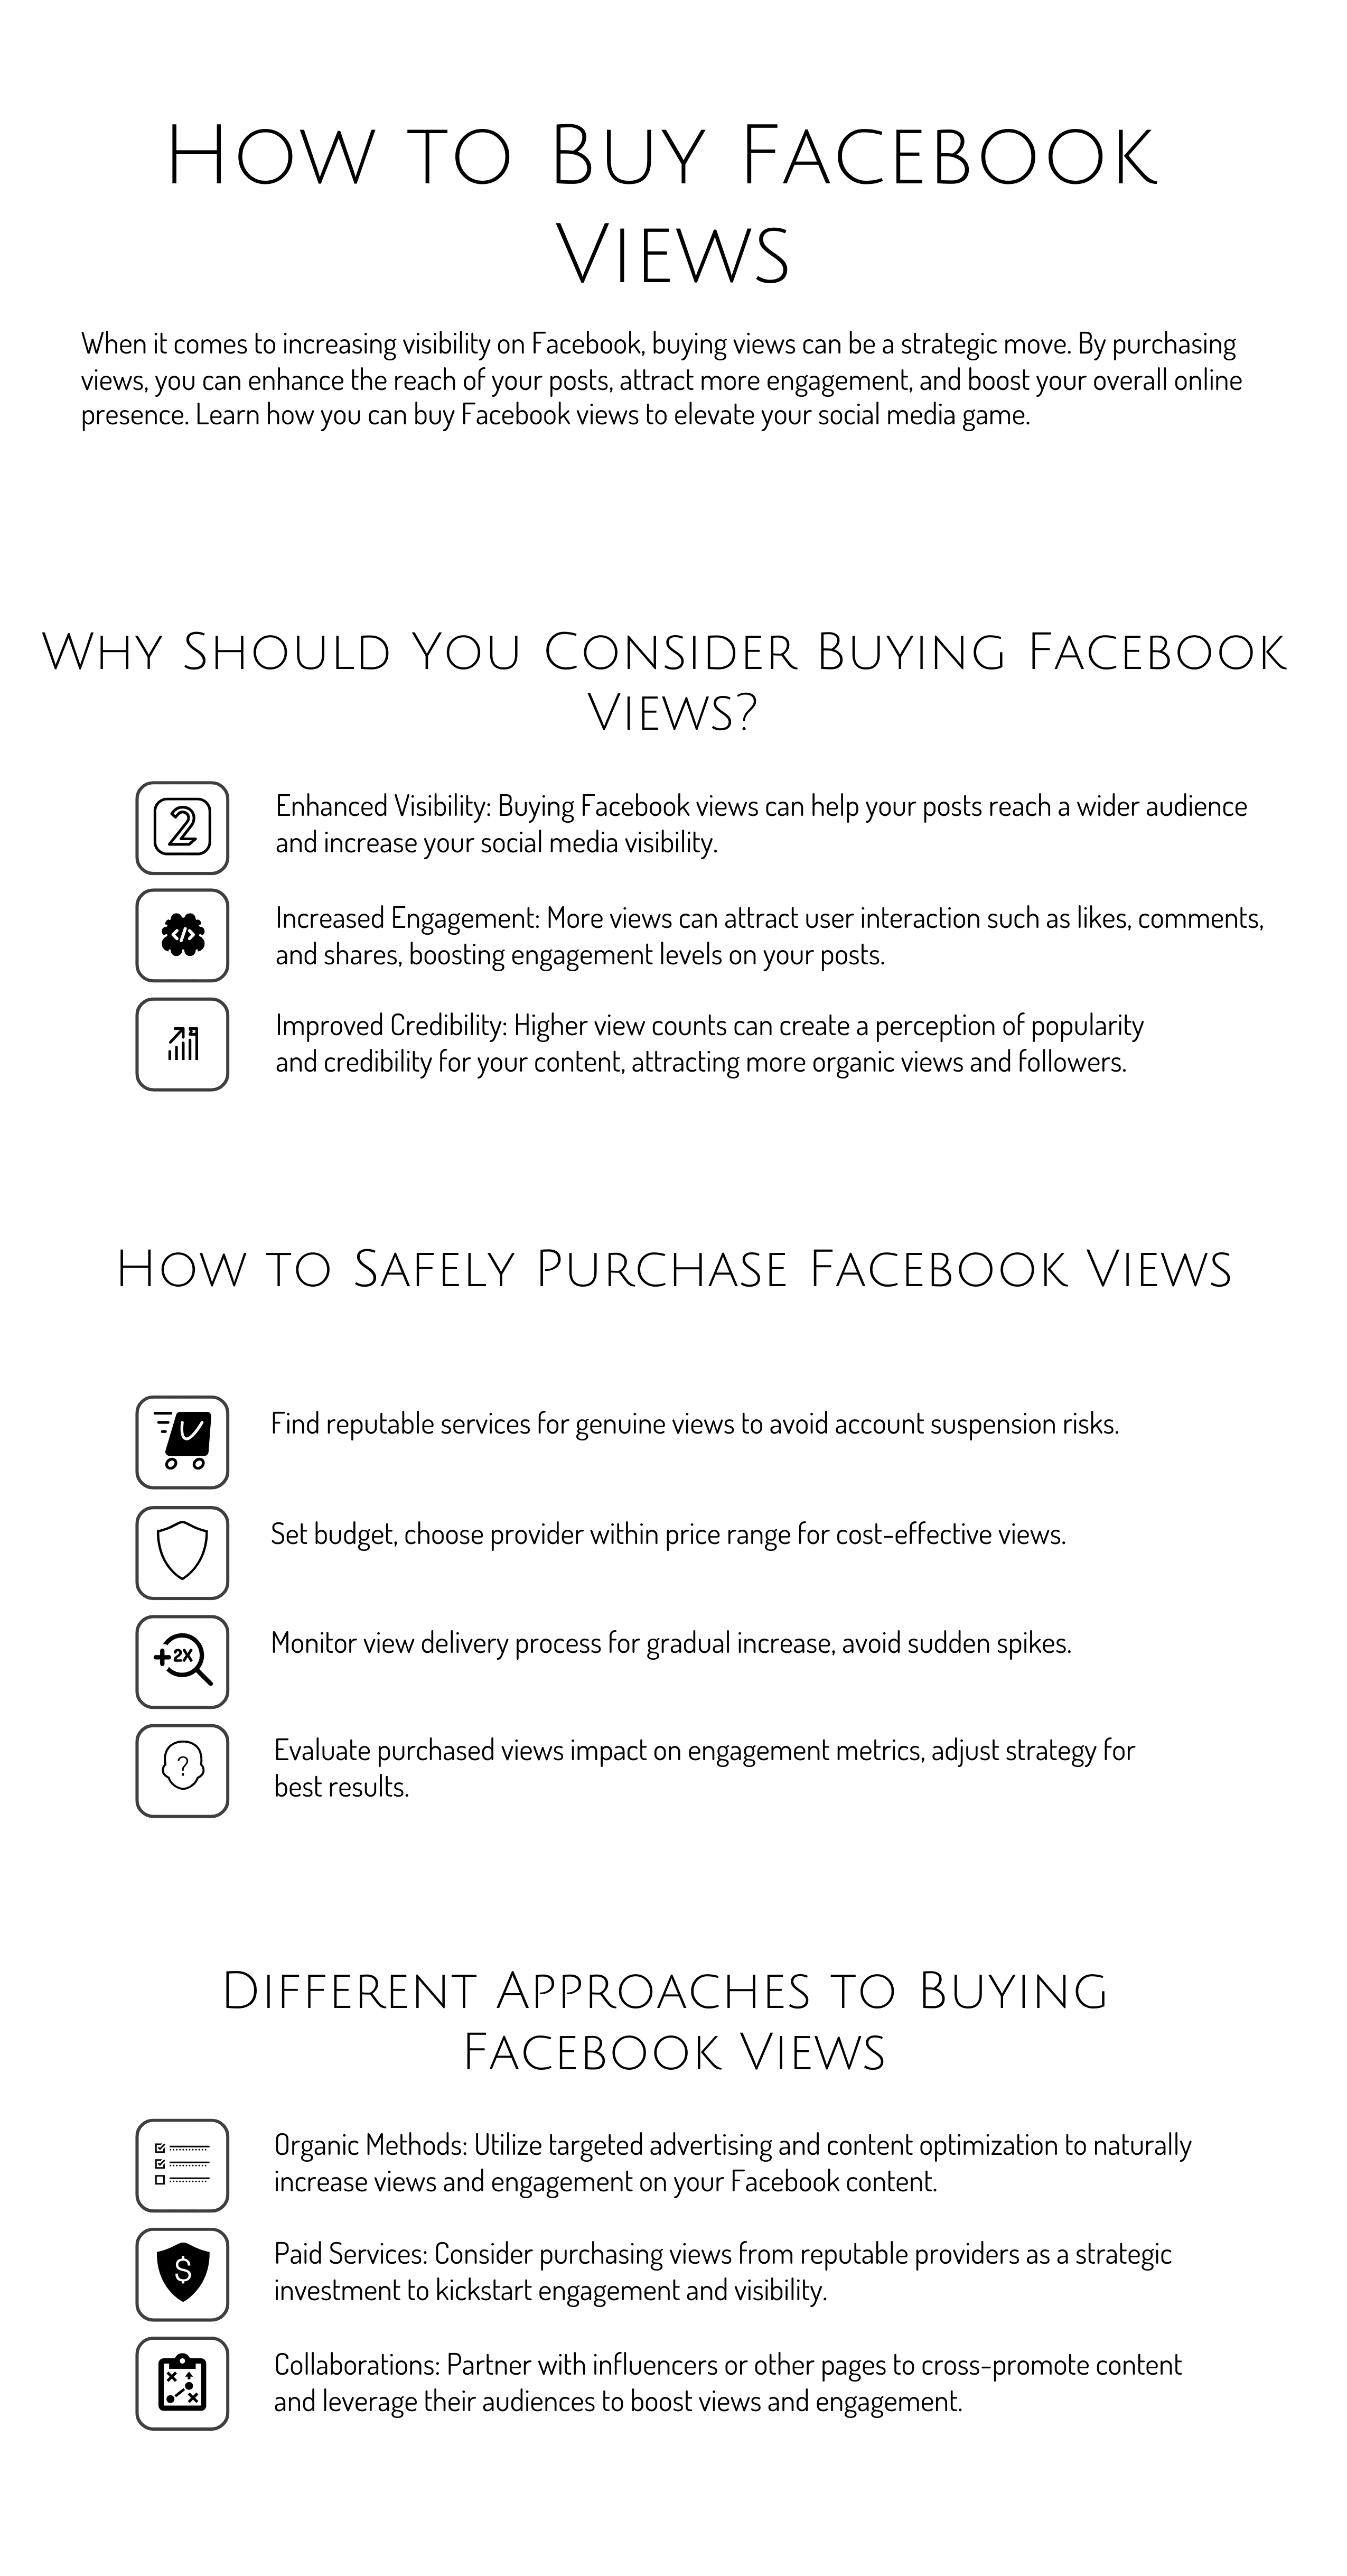 How to Buy Facebook Views